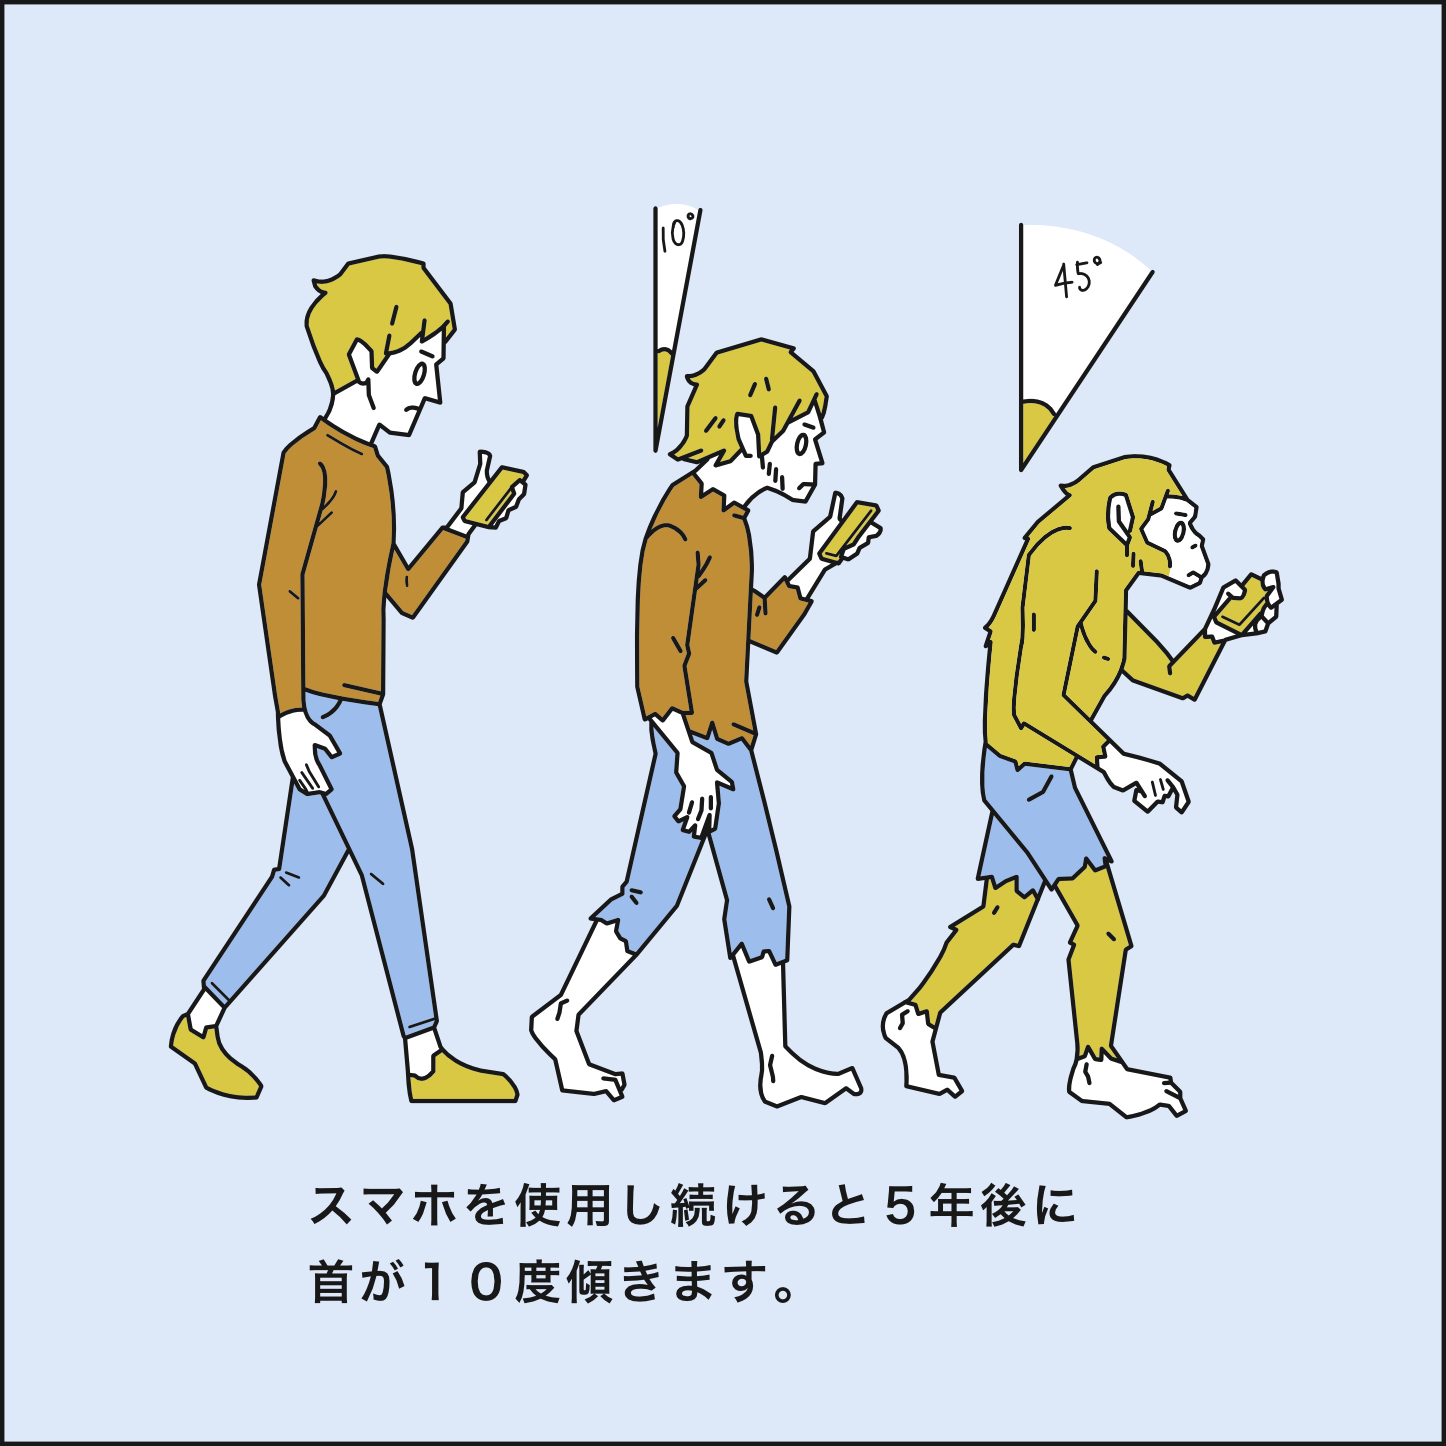 Future-of-Phones-Hangame-4.jpg